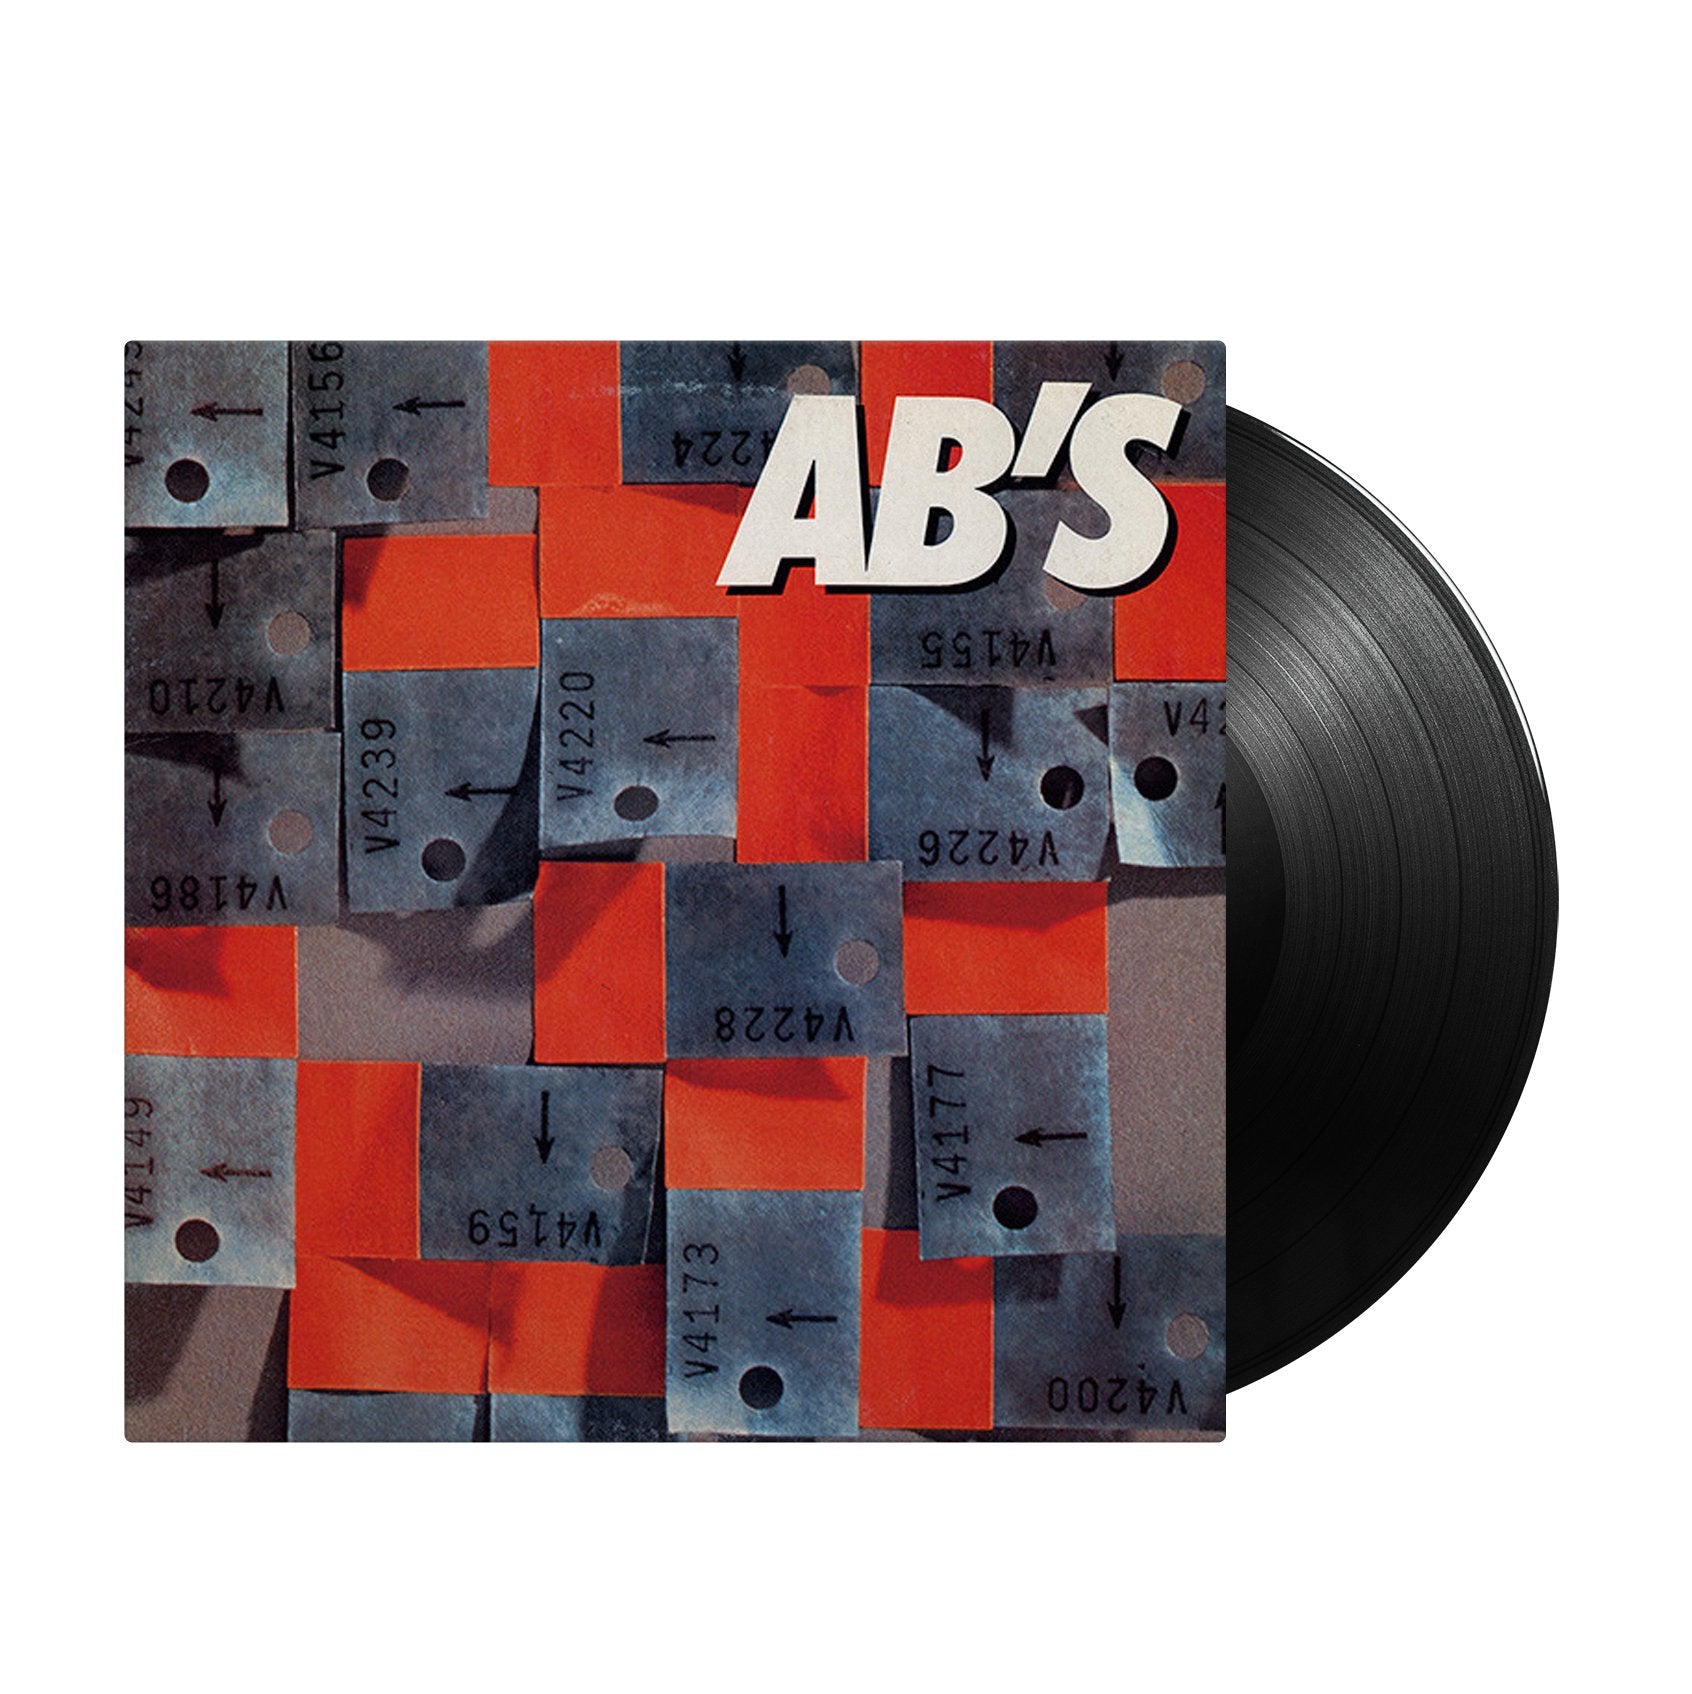 AB's - AB's (Japan Import) - Inner Ocean Records